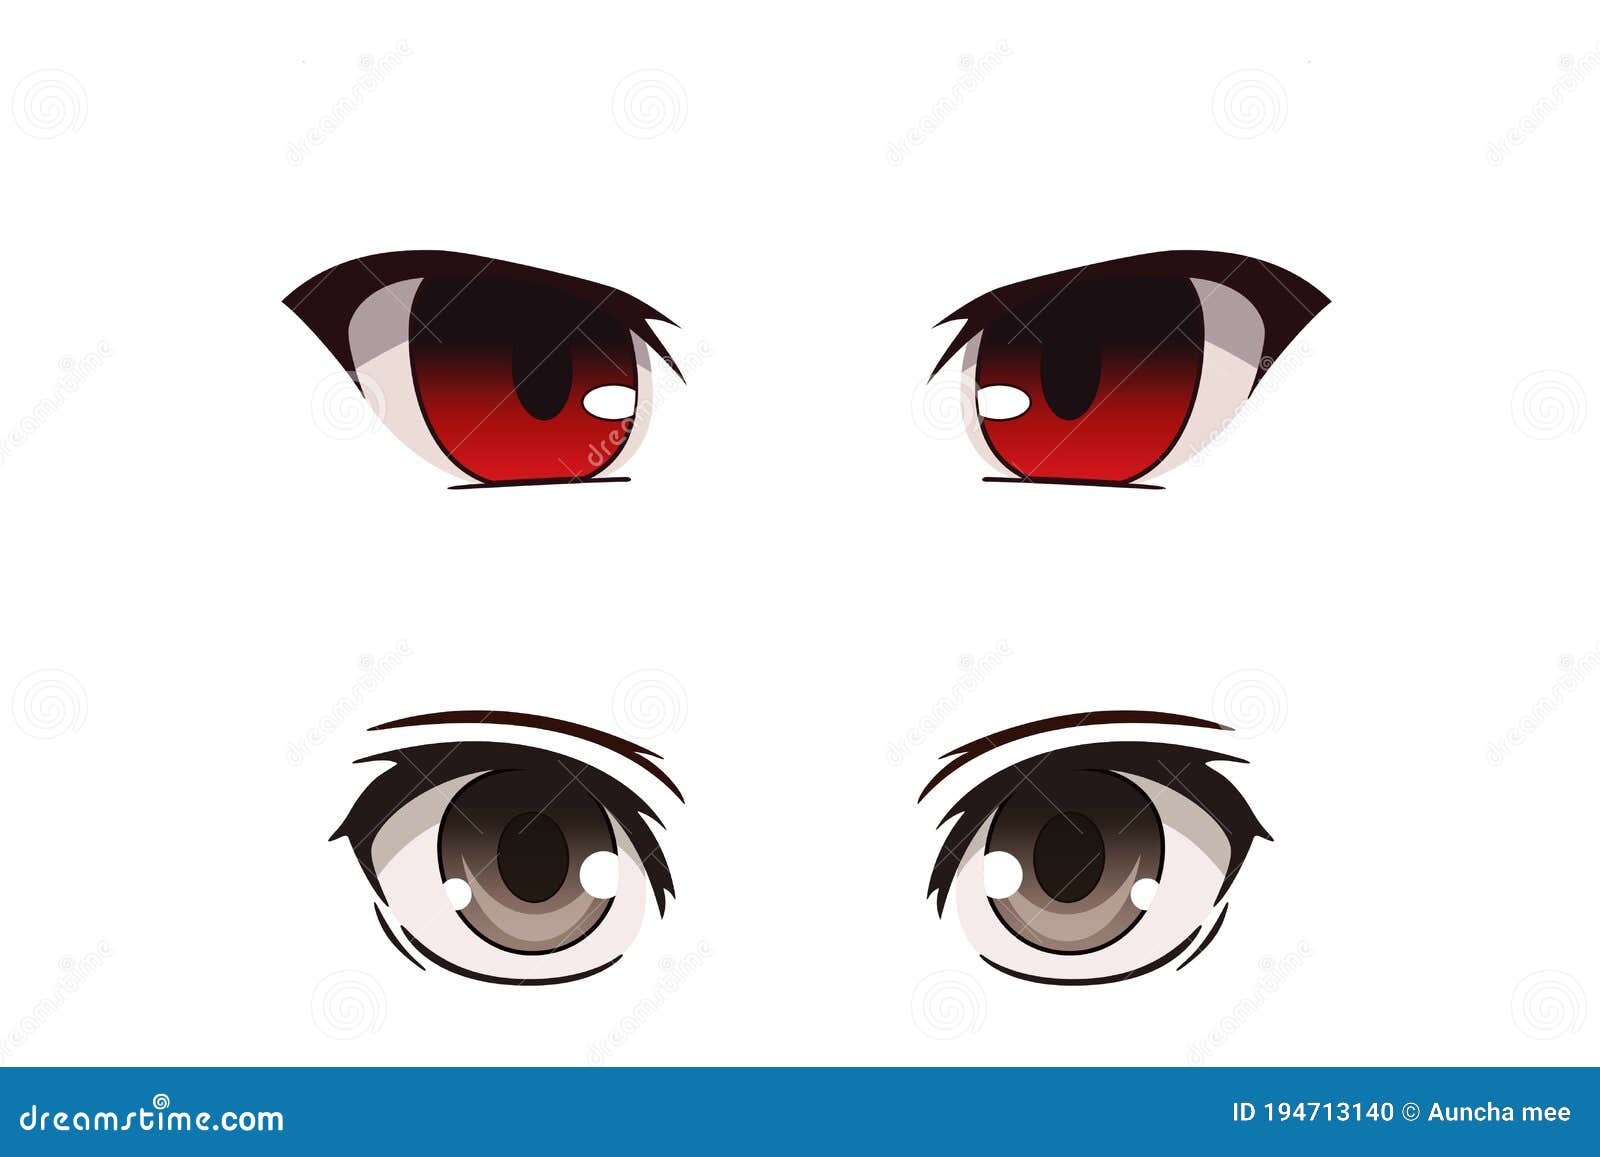 Anime Eyes Bright Beautiful Eyes Closeup Stock Vector Royalty Free  1722003871  Shutterstock